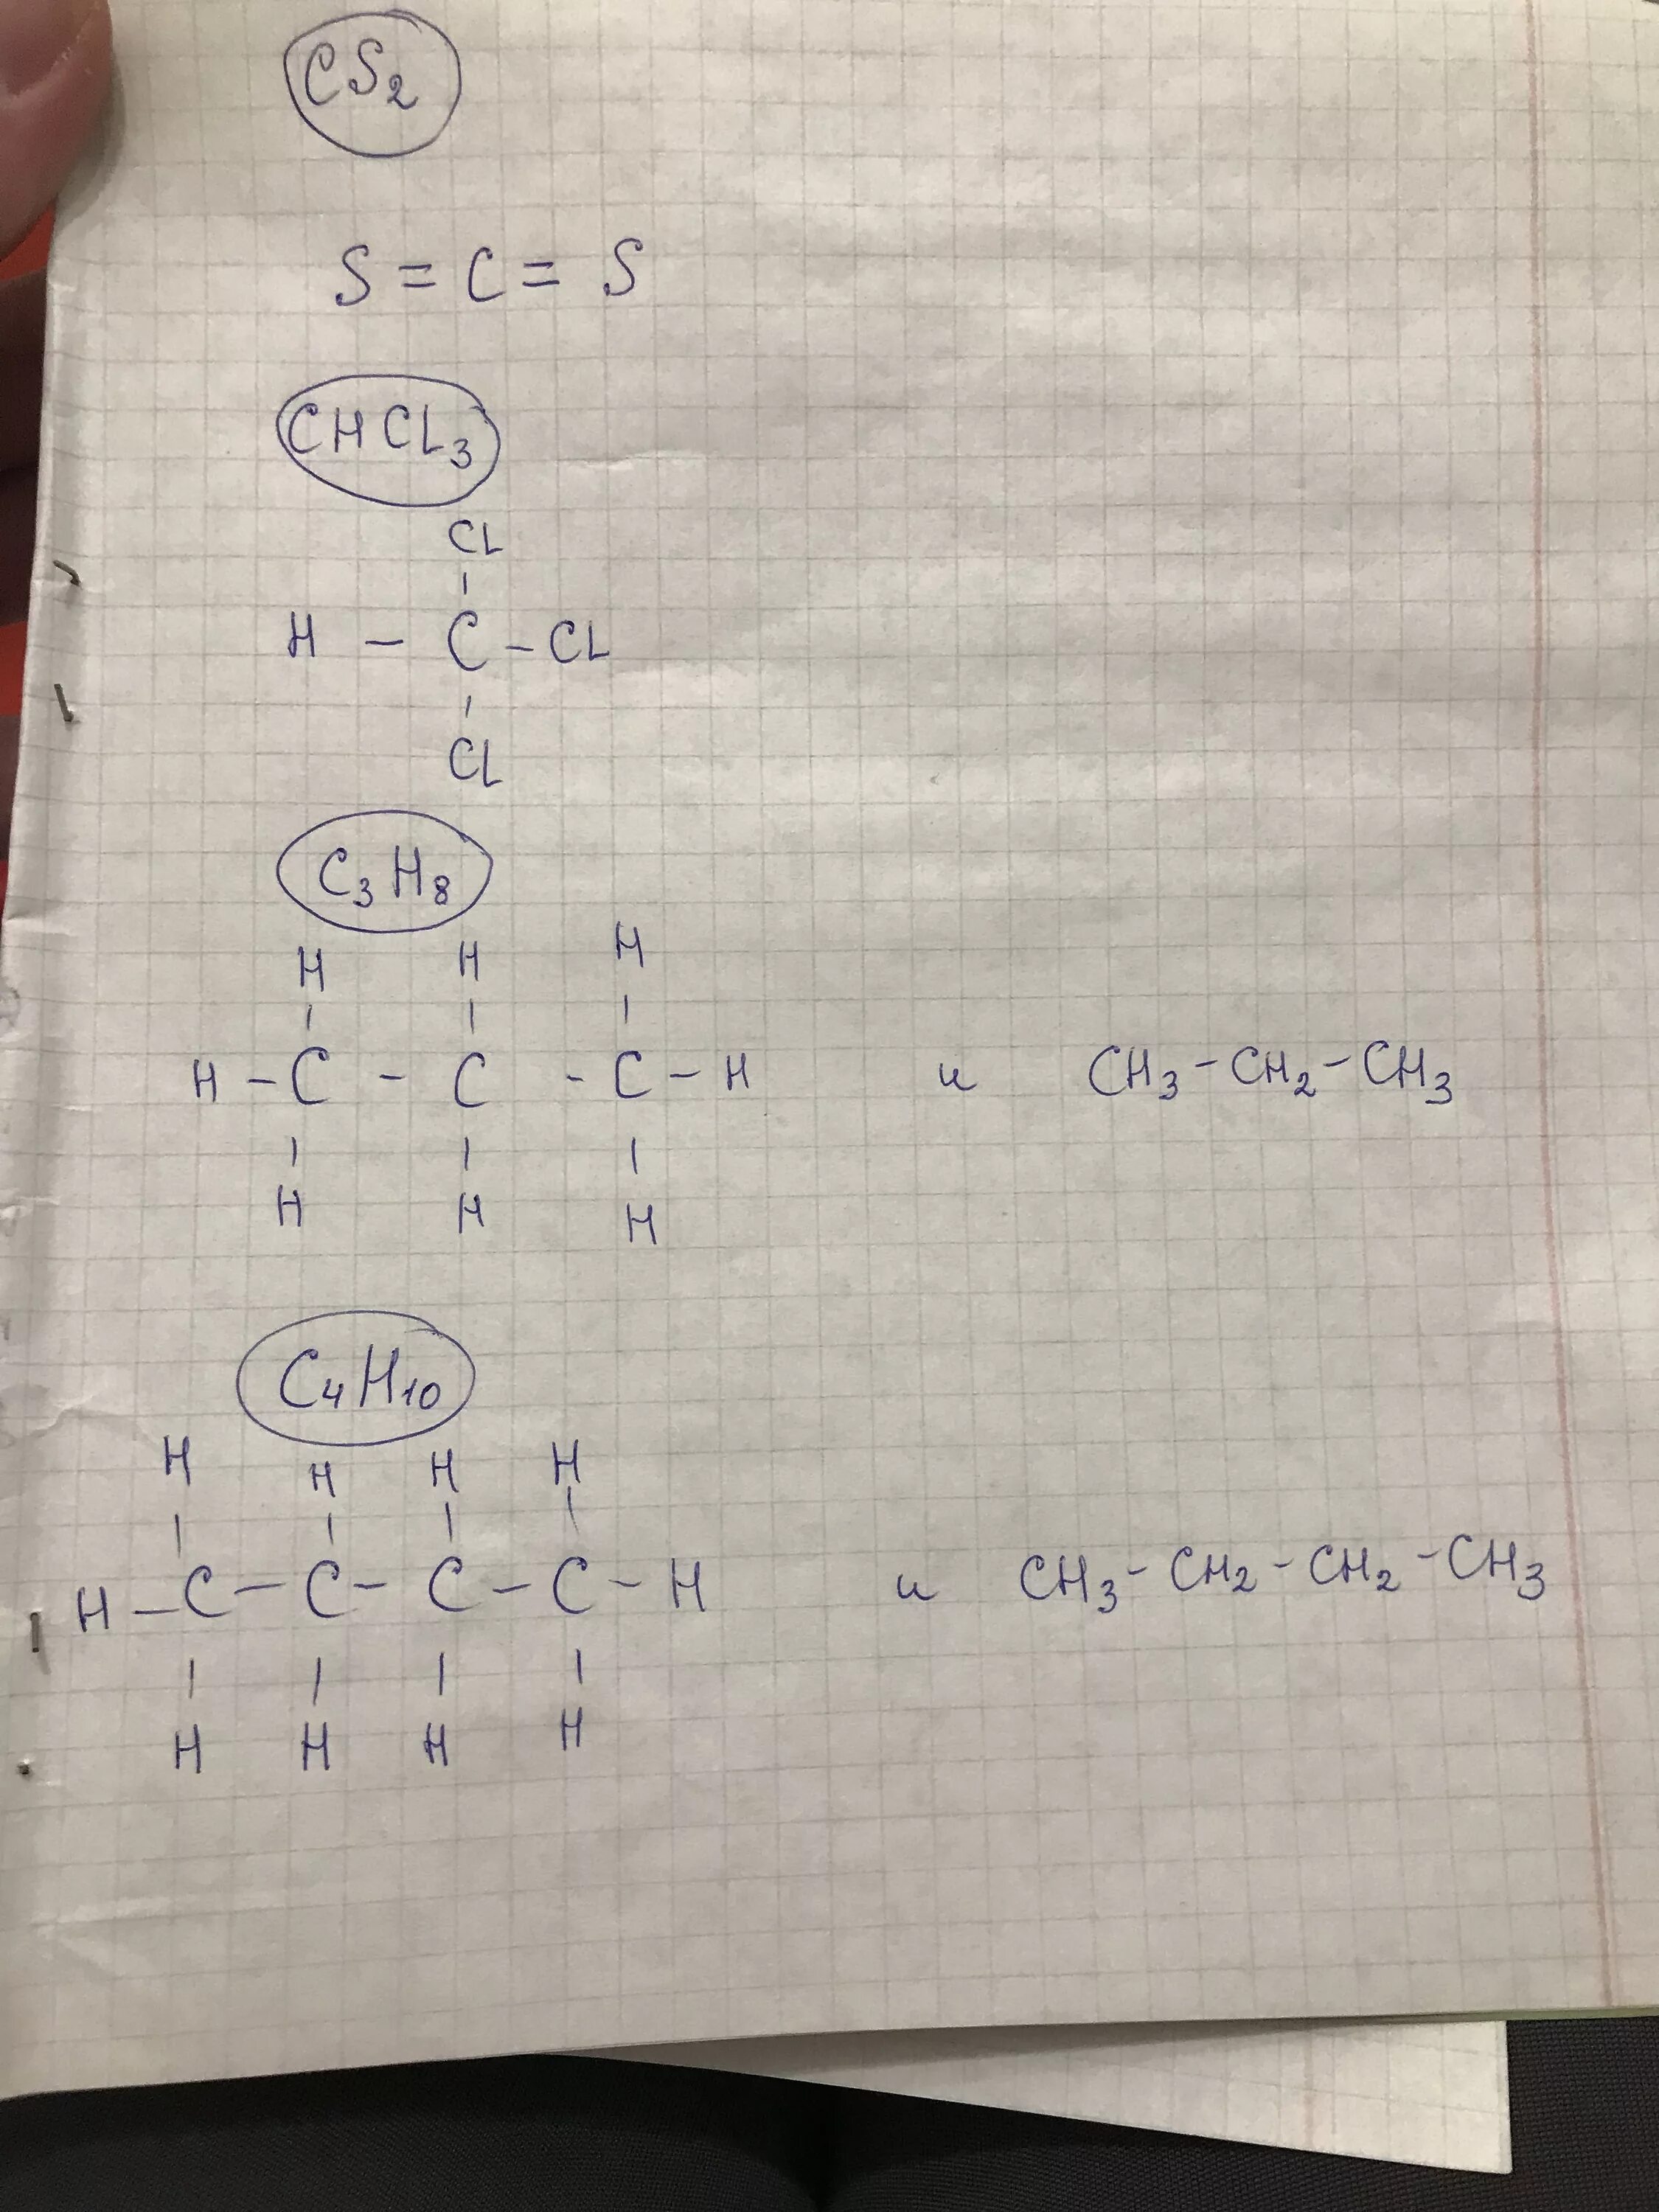 Cac2 ch. Полные структурные формулы веществ. Ch2cl2 структурная формула. Структурные формулы вещества cs2. Напишите структурные формулы веществ.